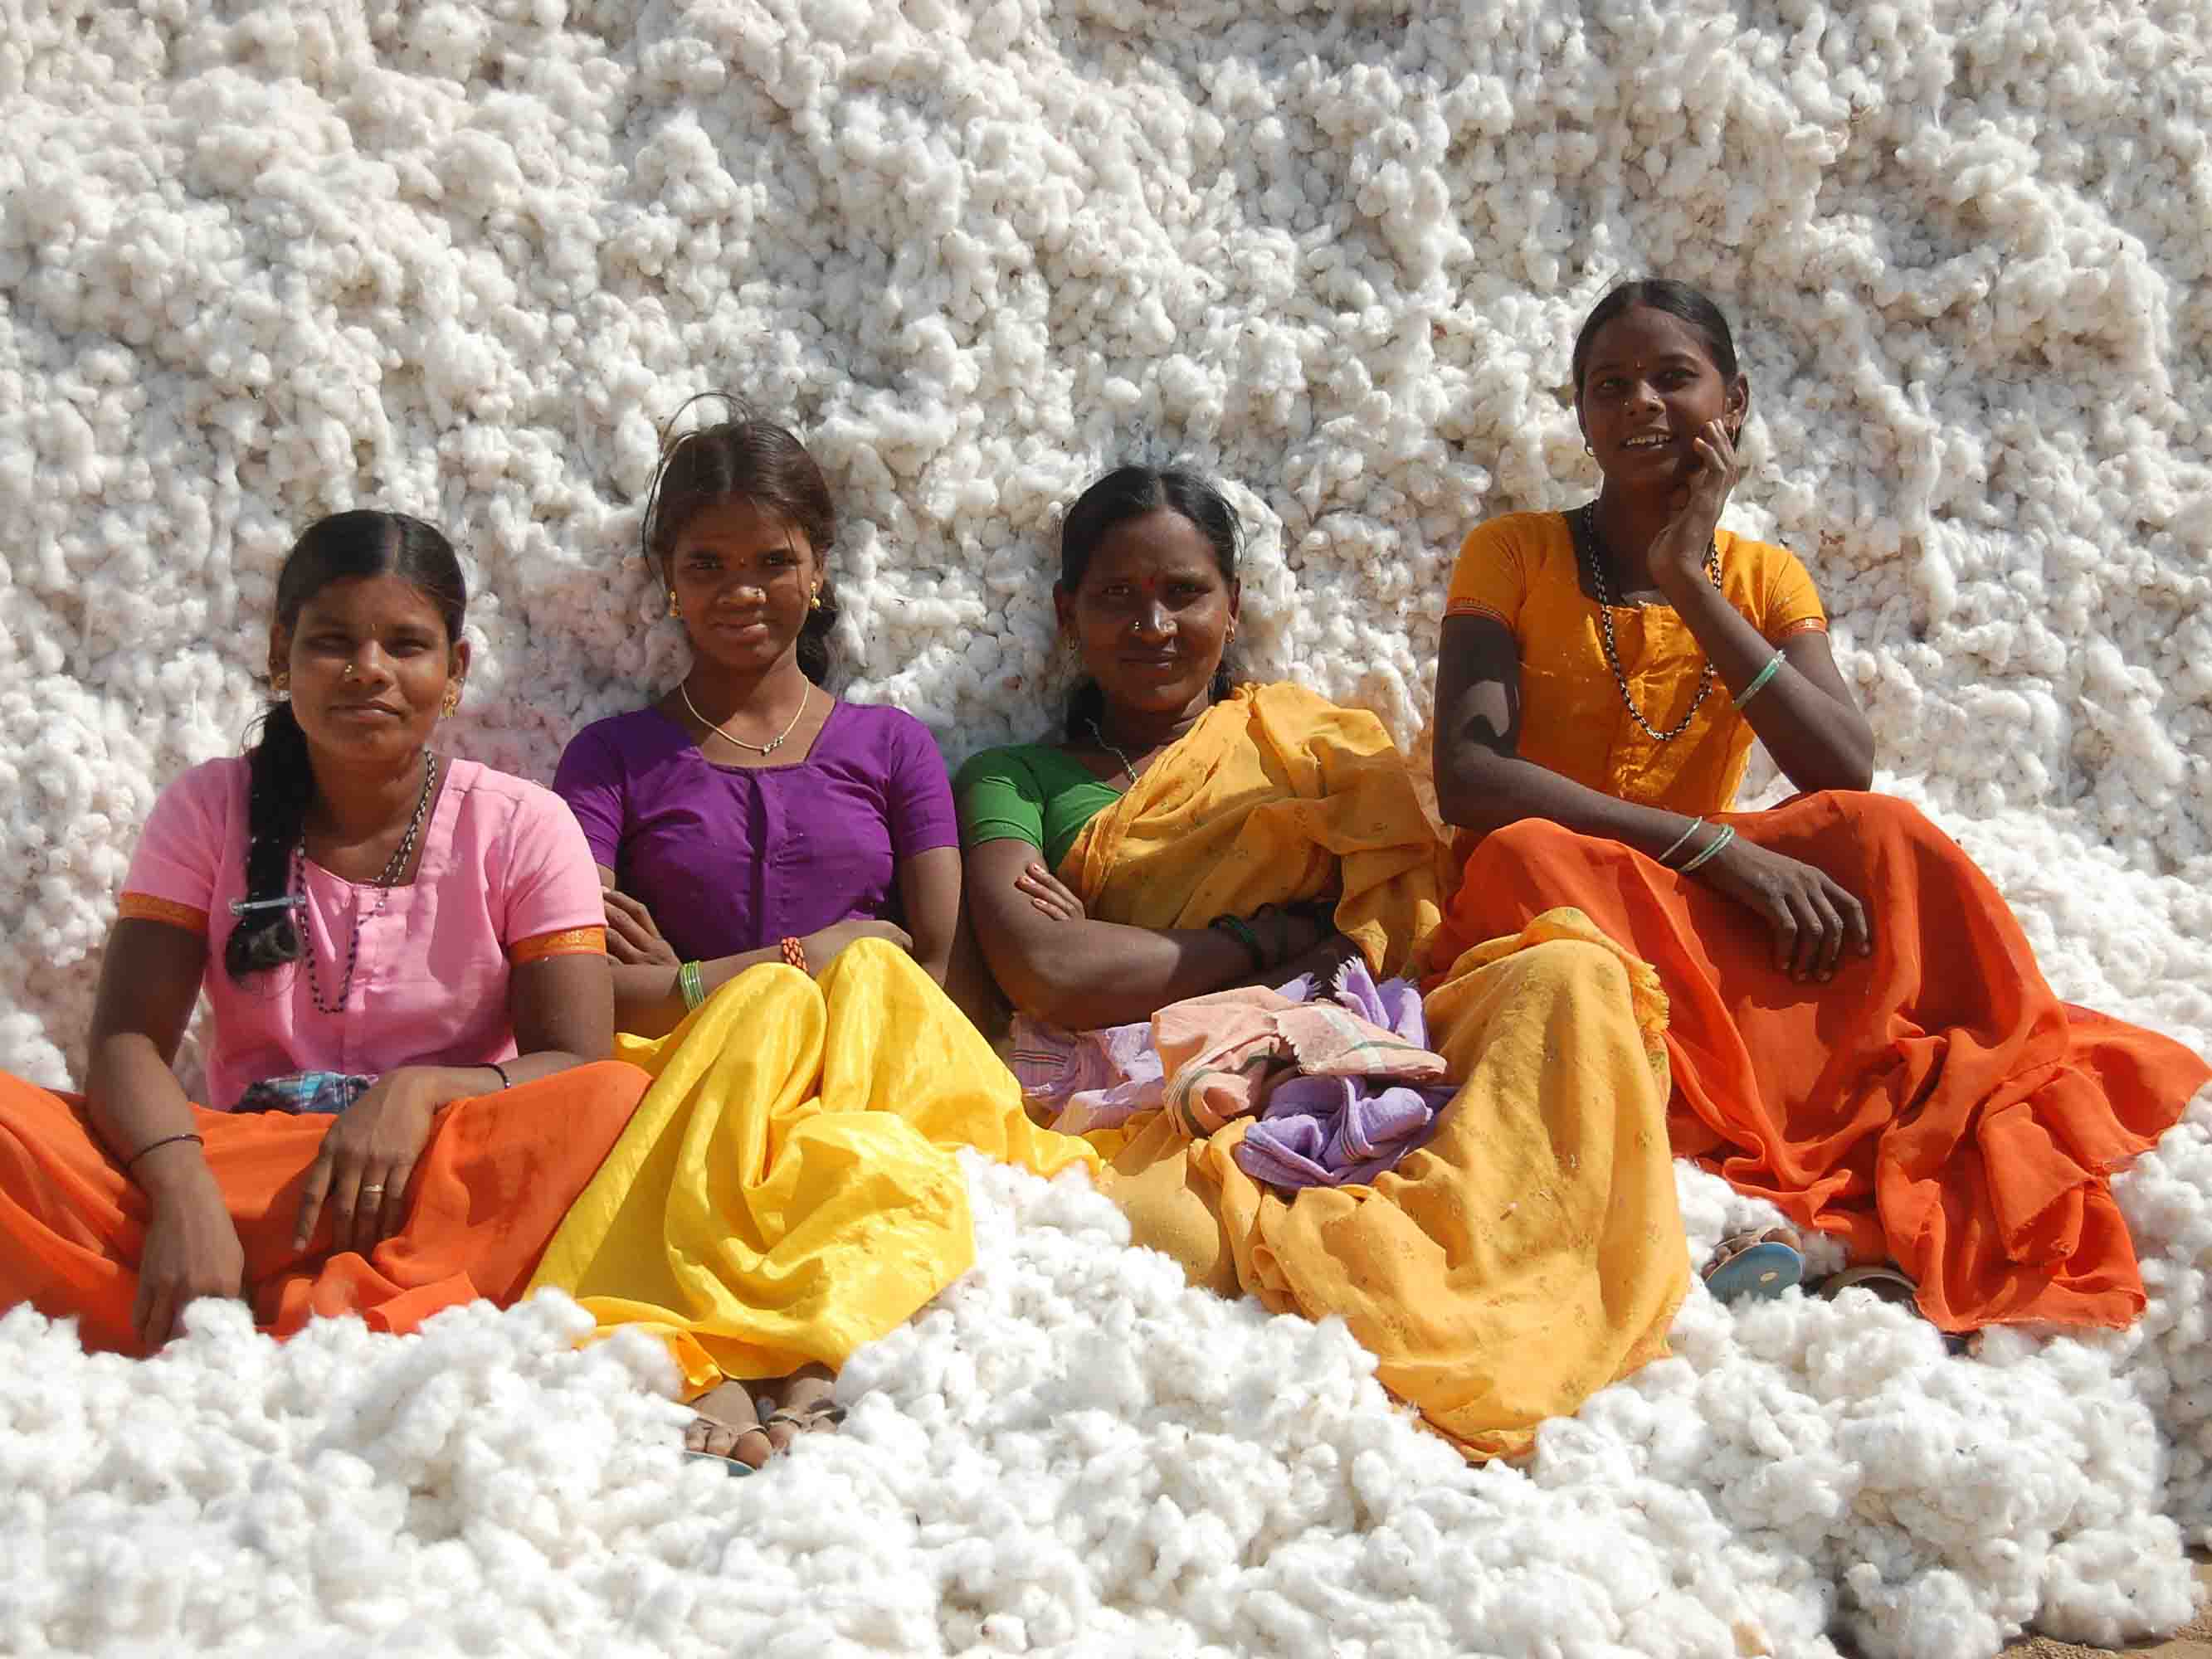 Cotton Production in Thousand Metric Tonnes: 6,423